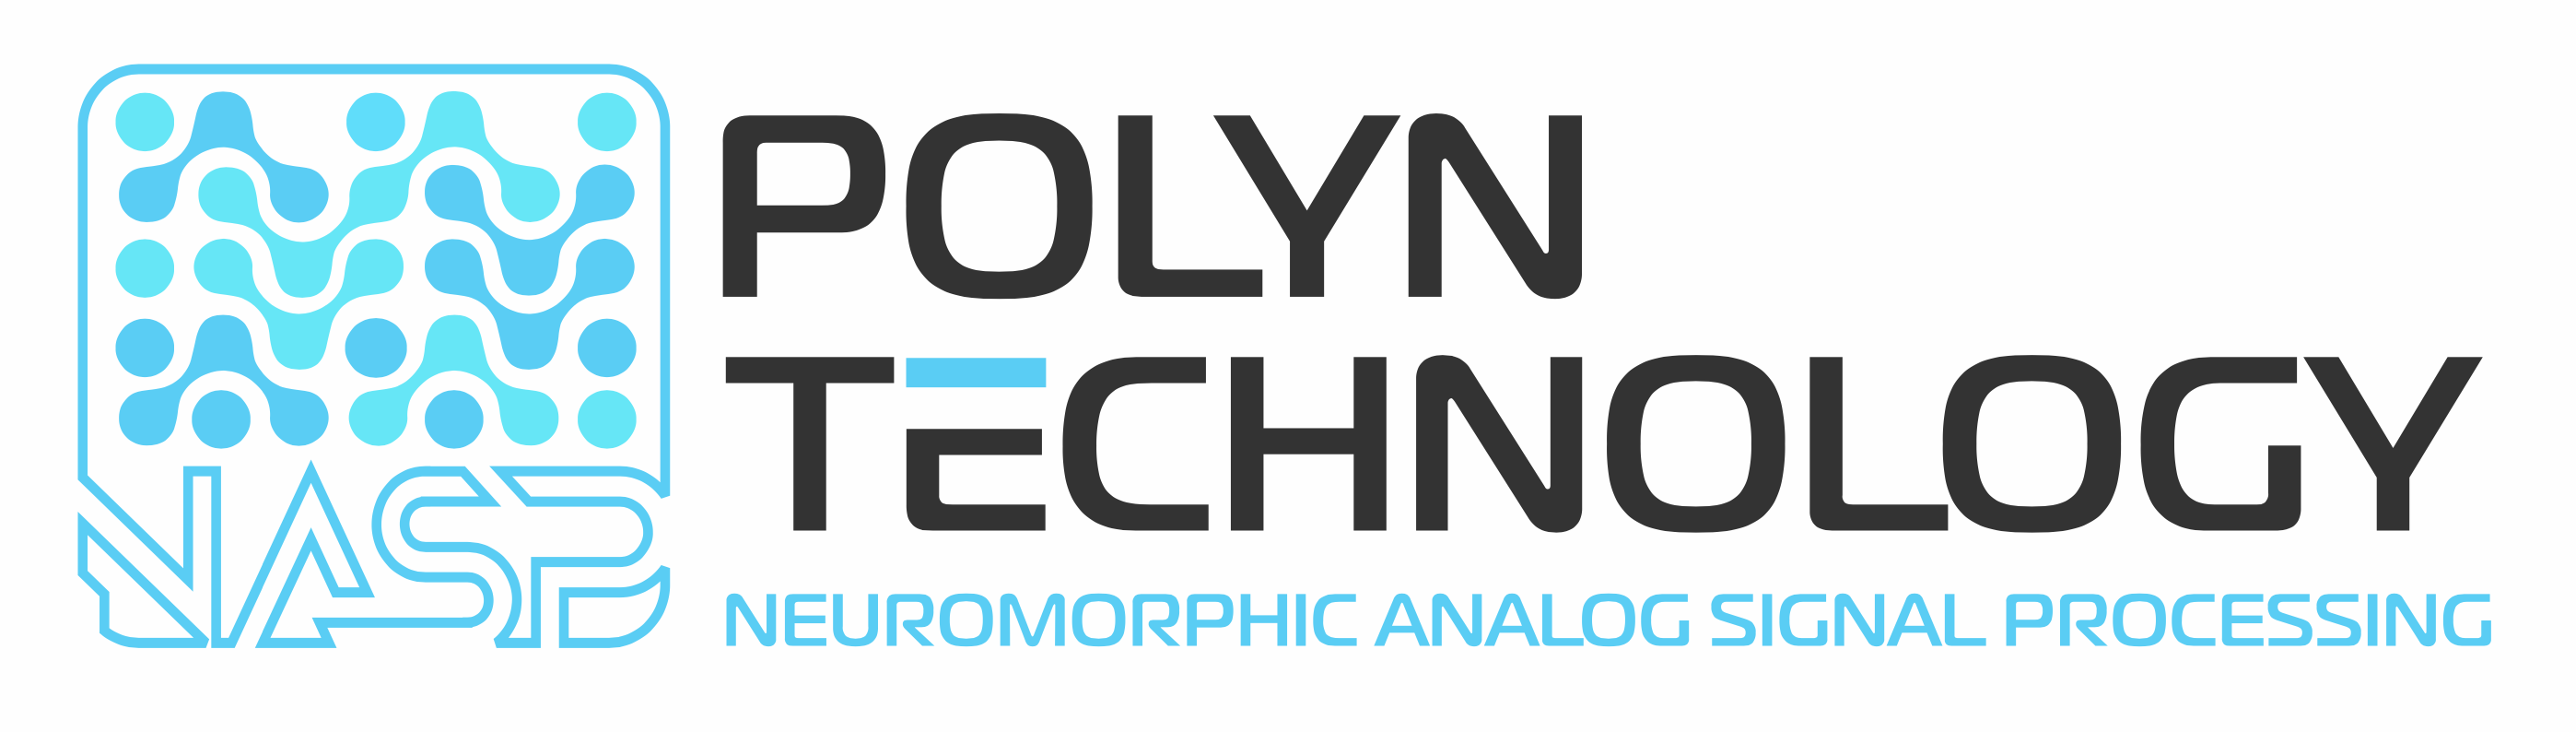 Polyn Technology logo